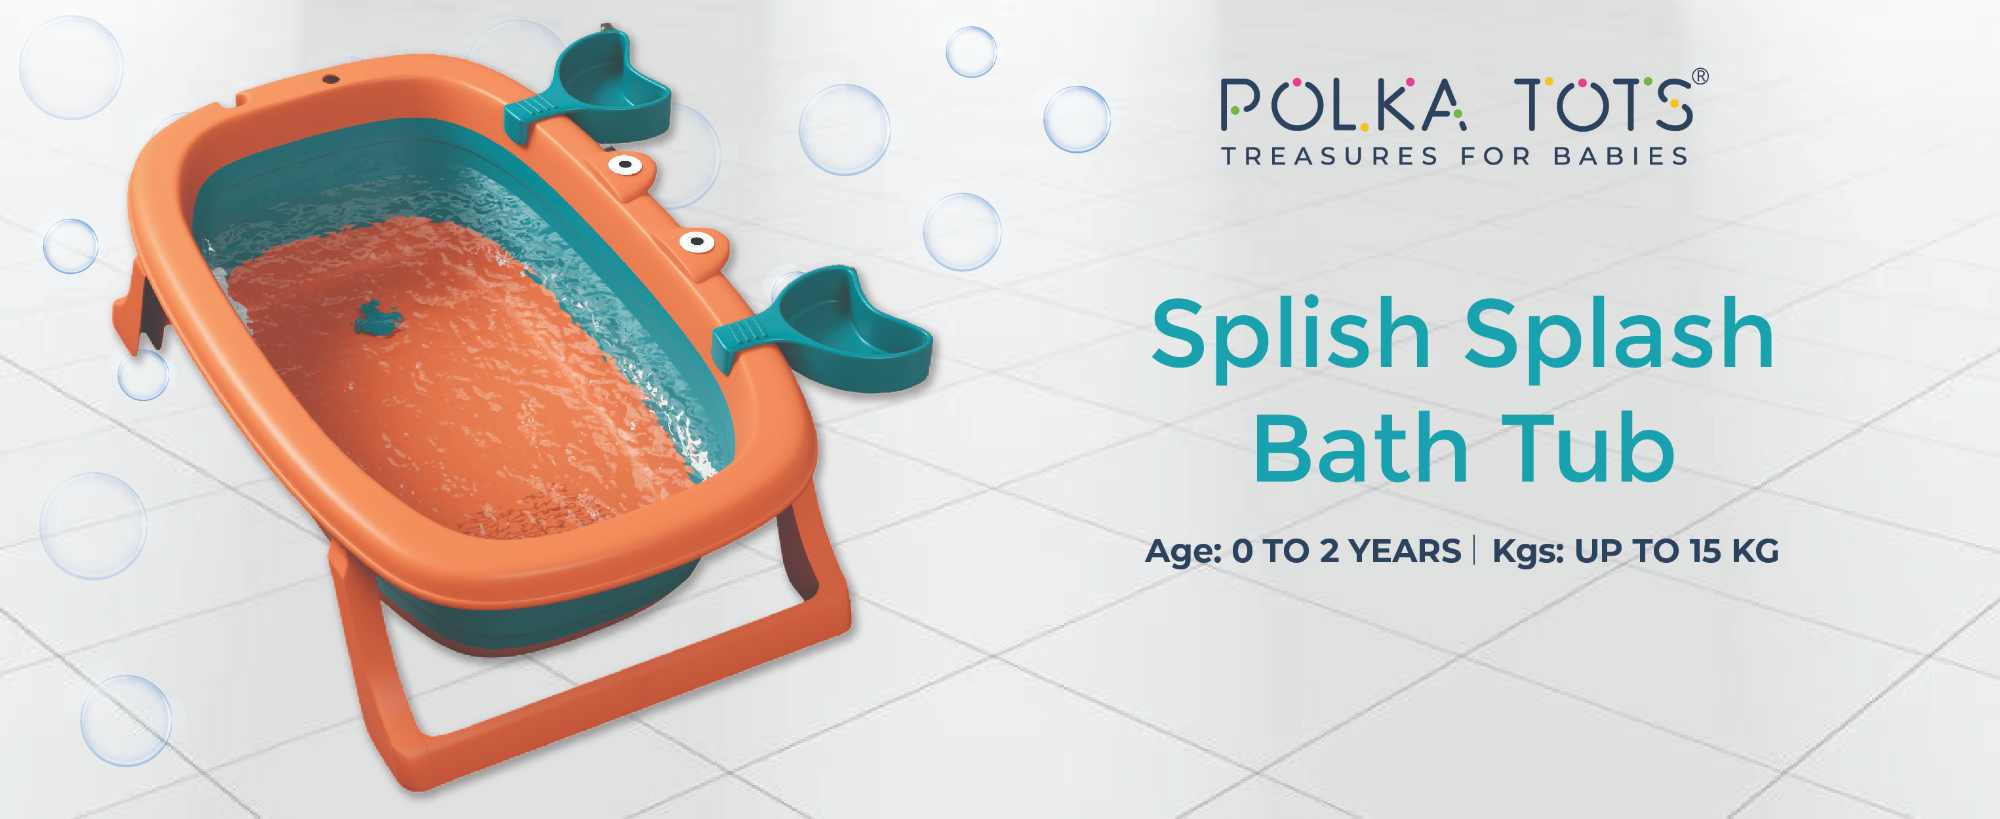 polka tots baby bathing tub